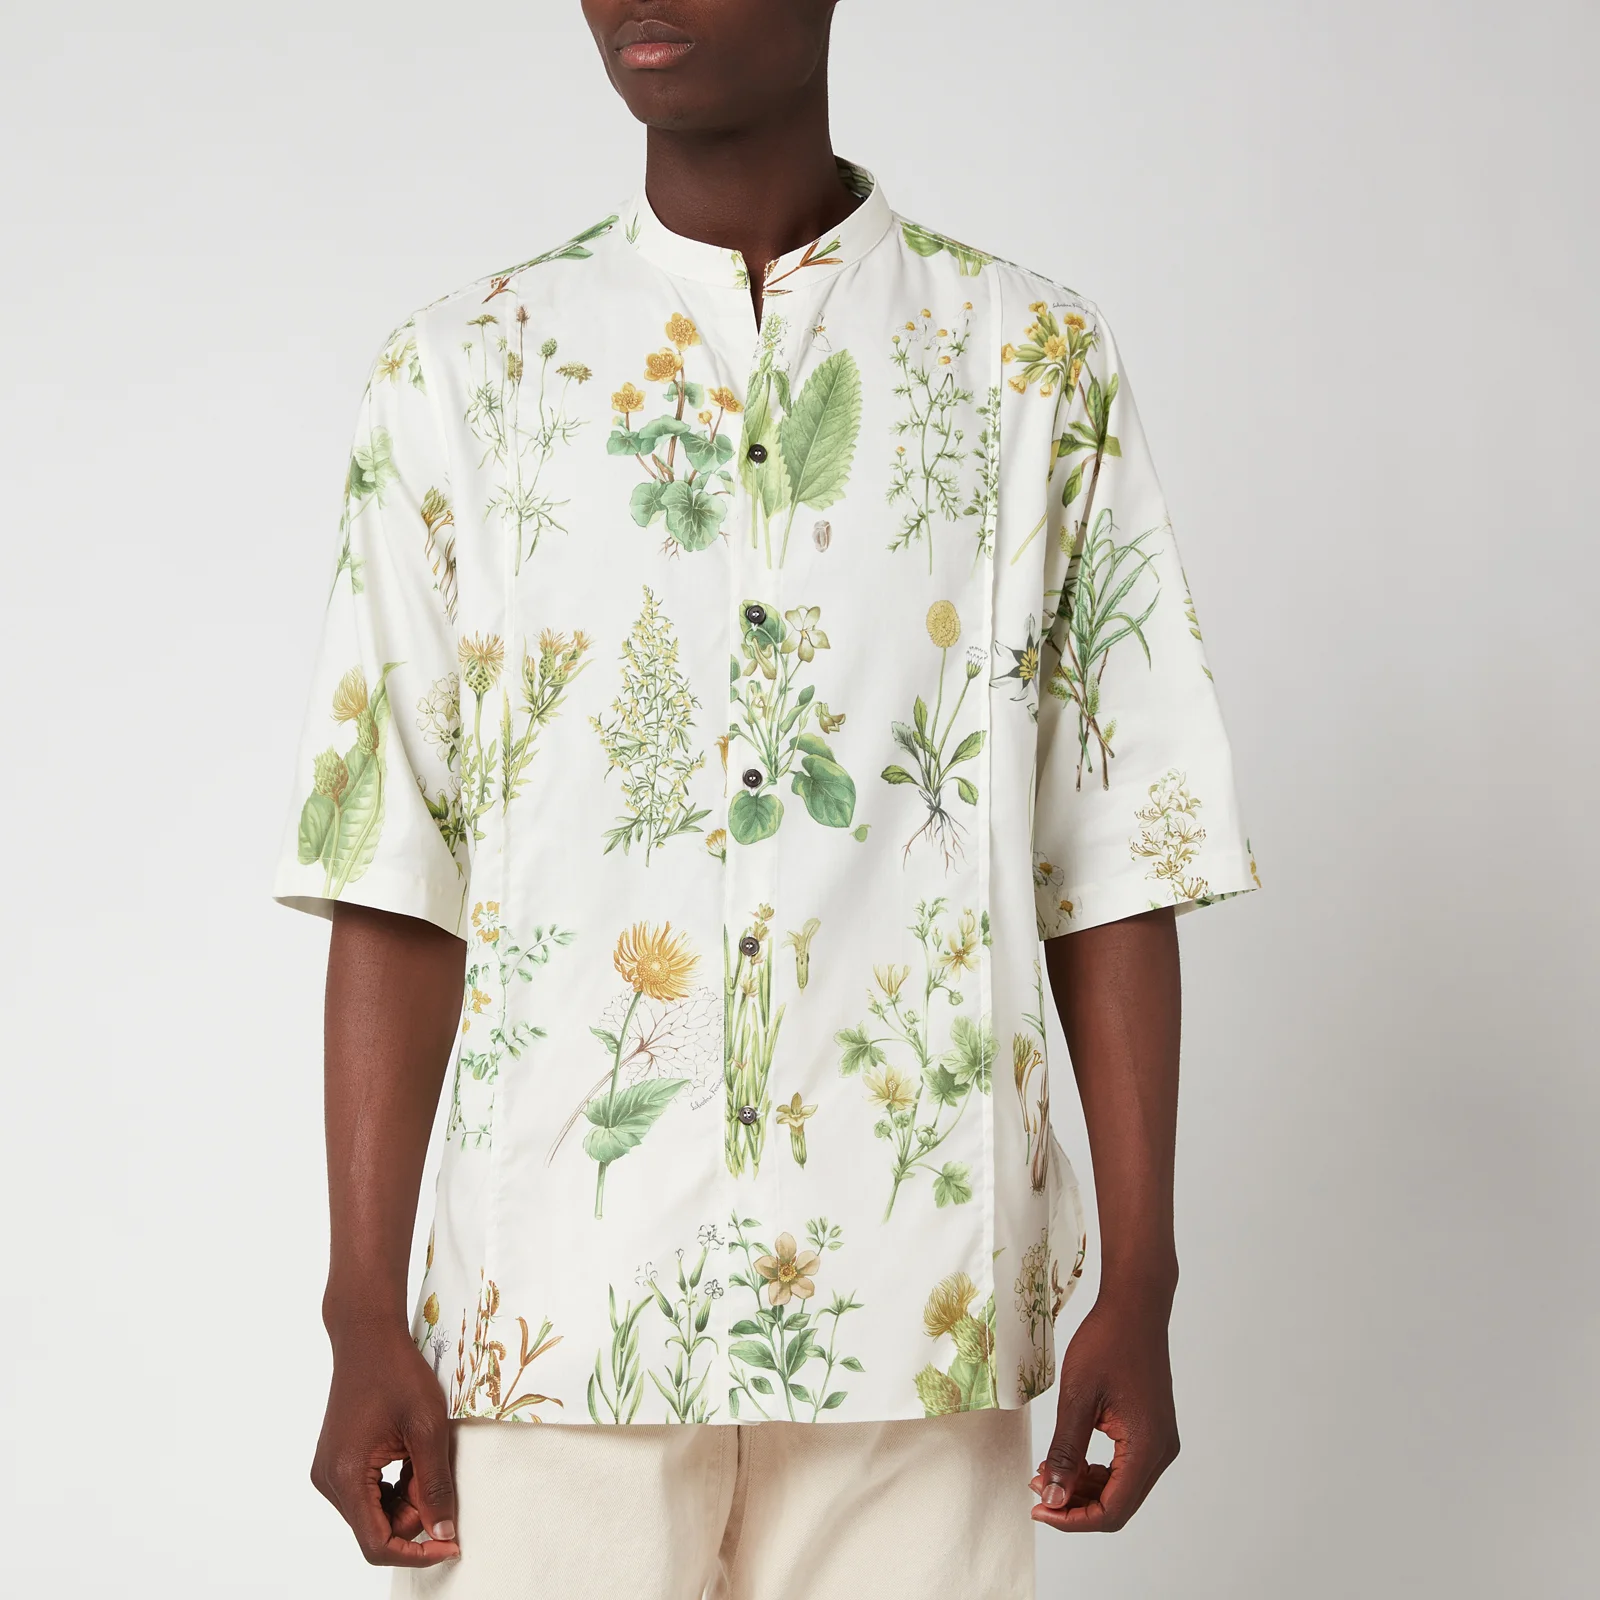 Ferragamo Men's Short Sleeve Print Shirt - Green Image 1